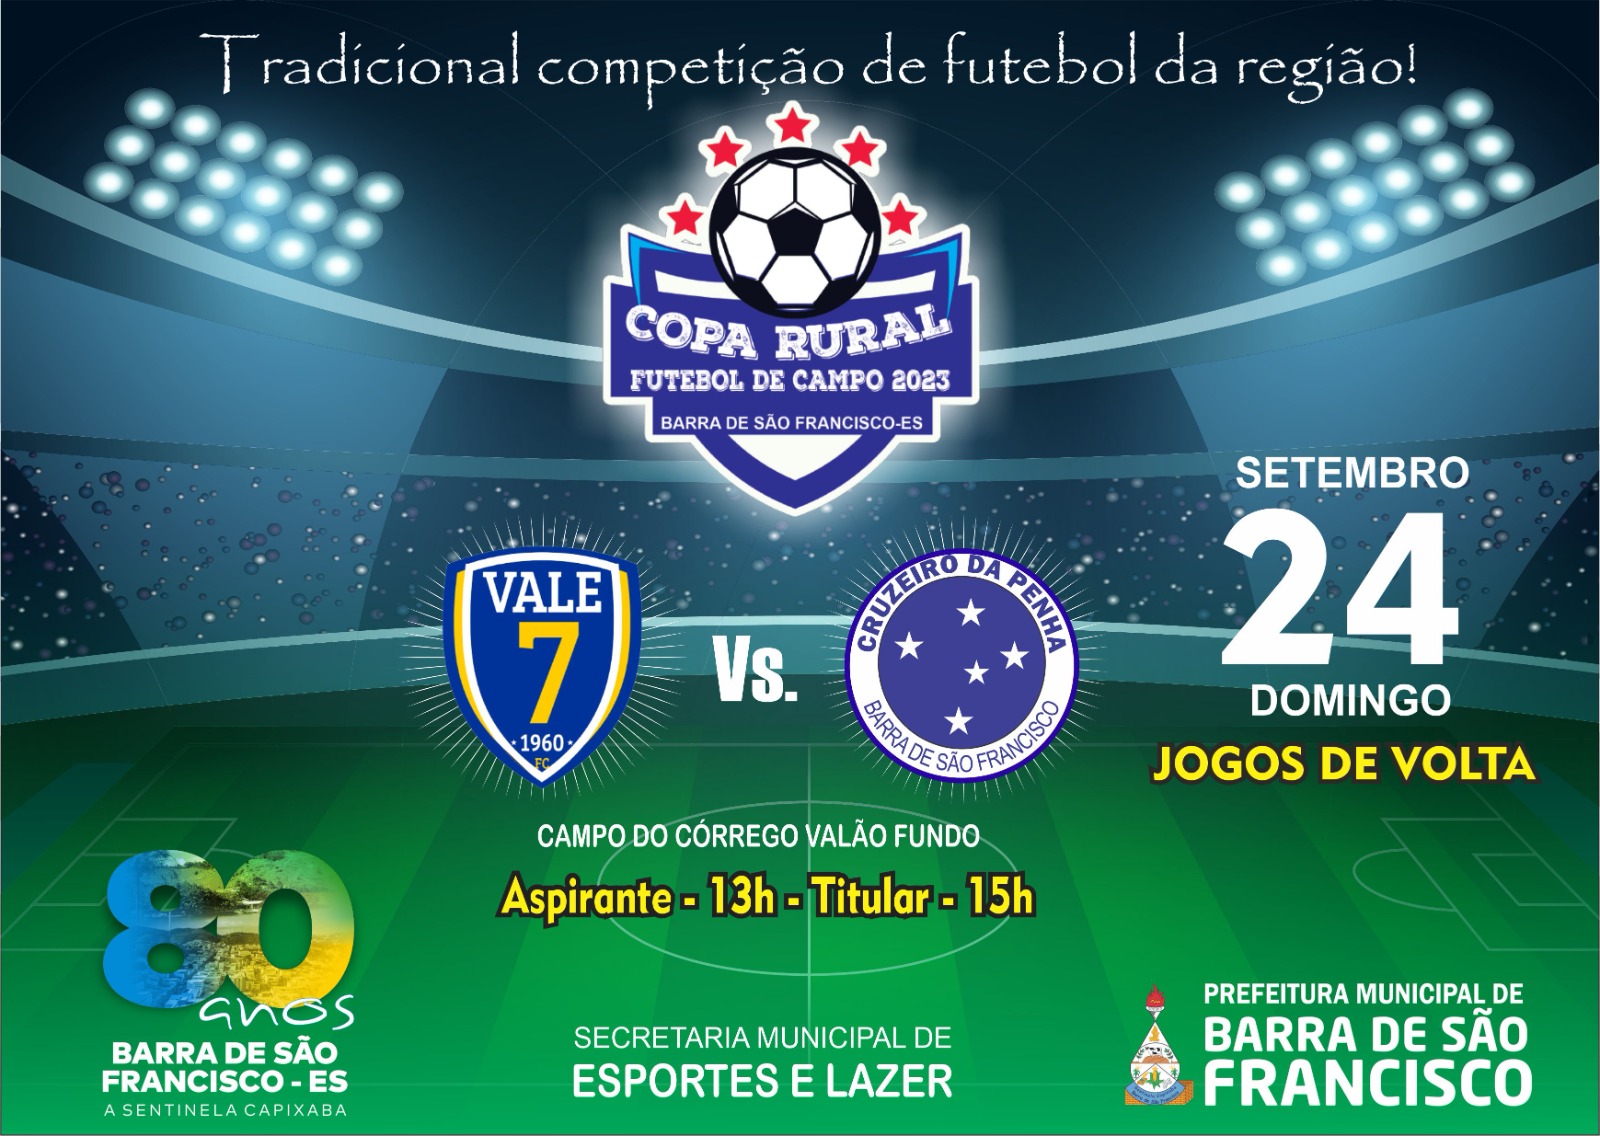 Vale 7 recebe Cruzeiro da Penha para os jogos de volta da próxima rodada da Copa Rural